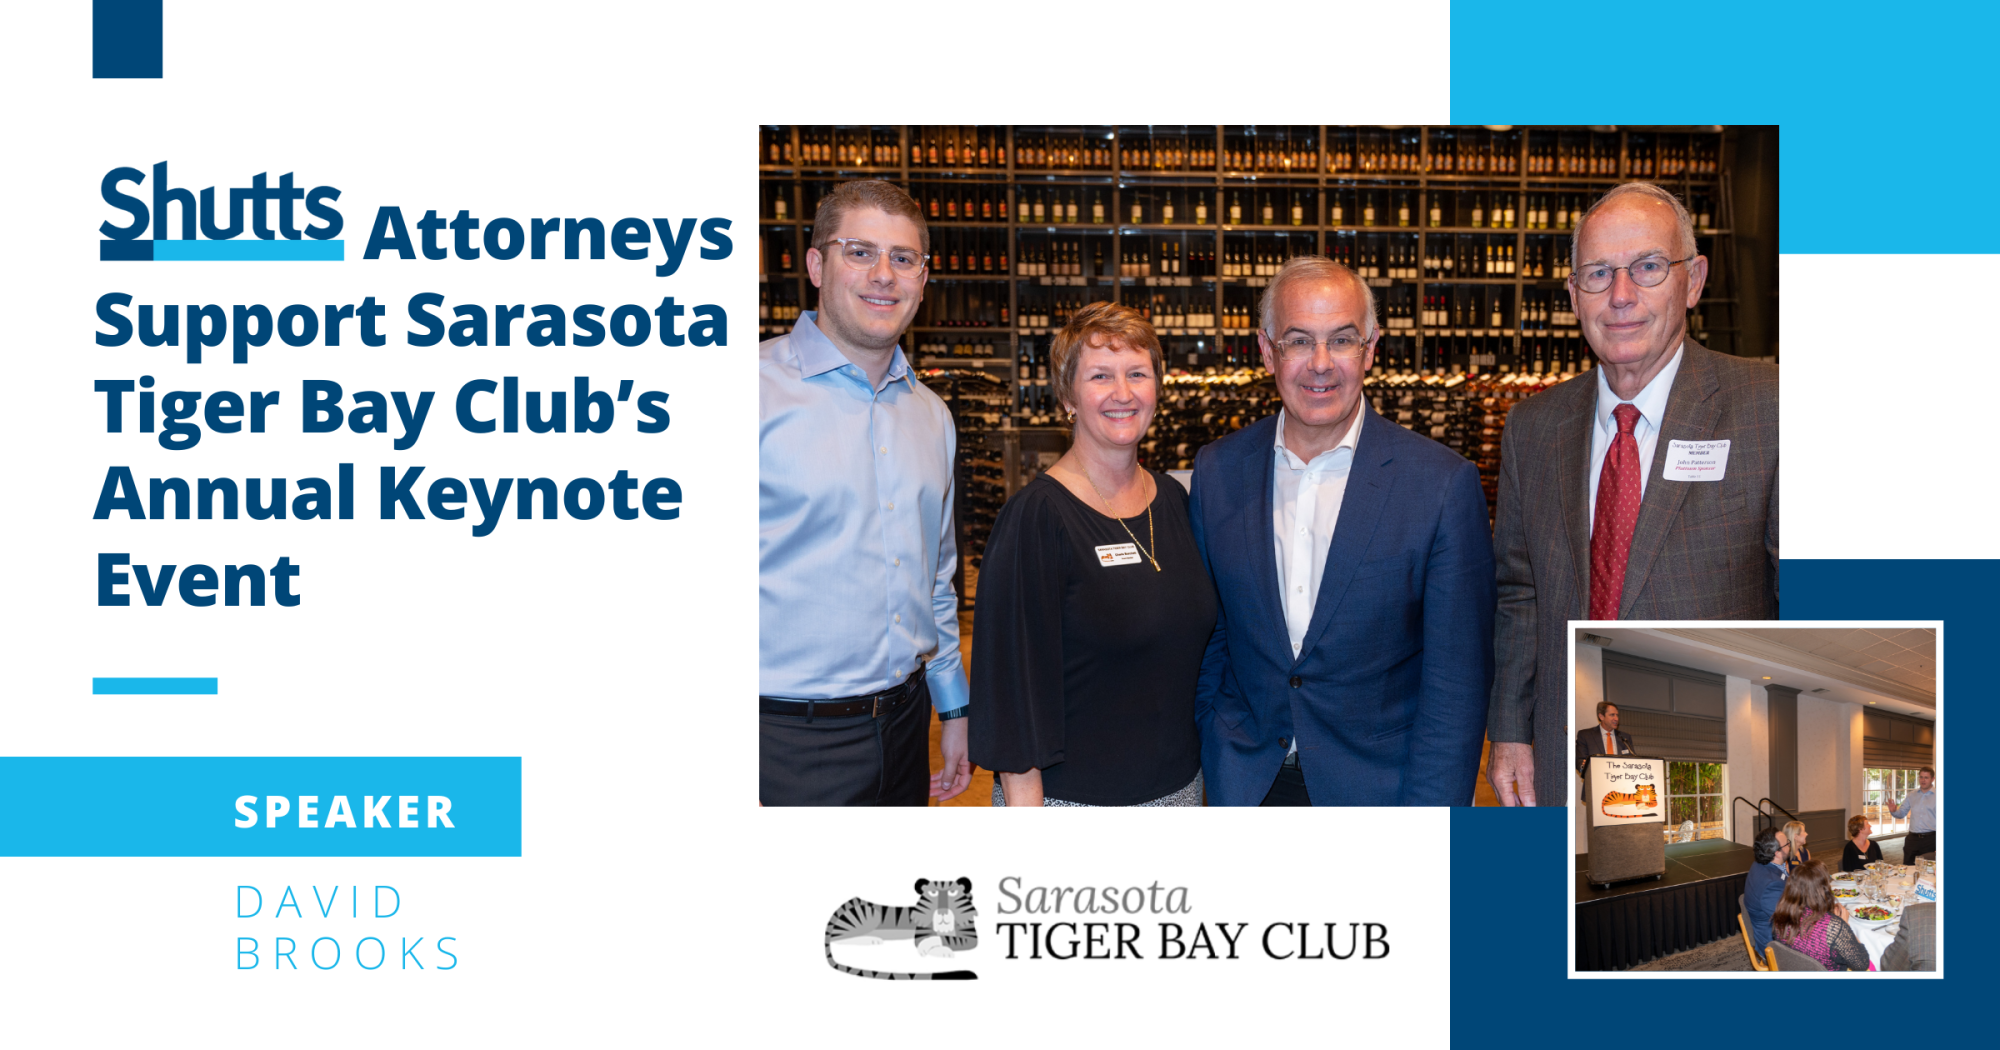 Shutts Attorneys Support Sarasota Tiger Bay Club’s Annual Keynote Event